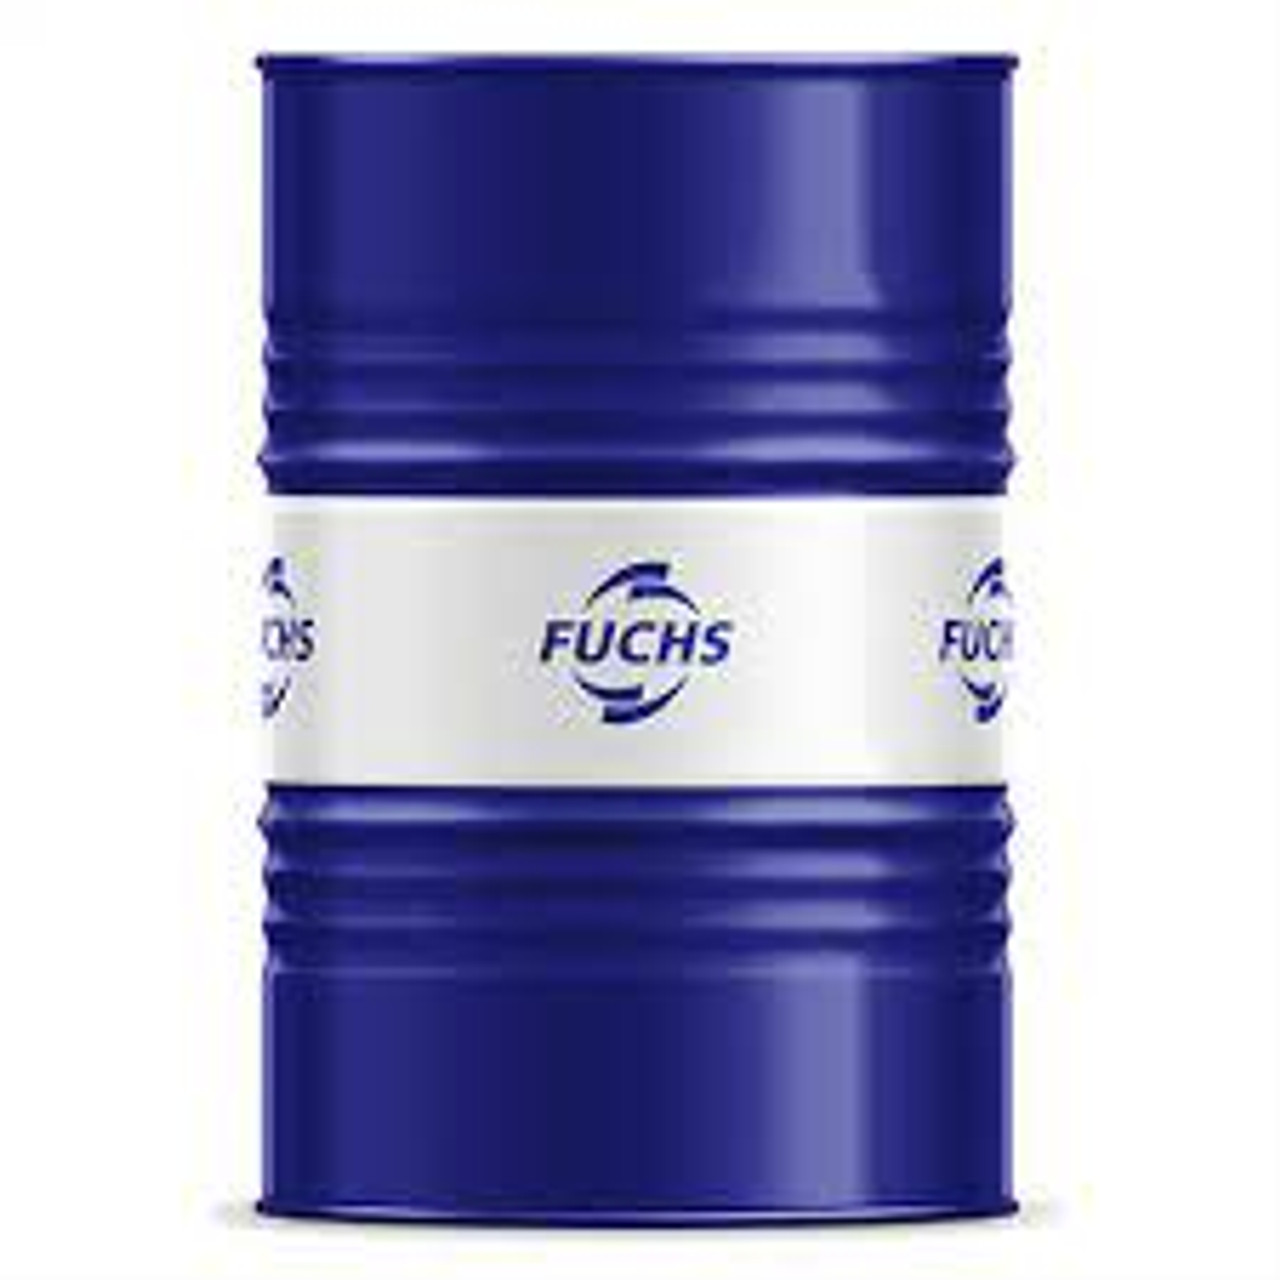 Fuchs Renolin ZAF B 5 HT Plus Spindle Oil - 55 Gallon Drum